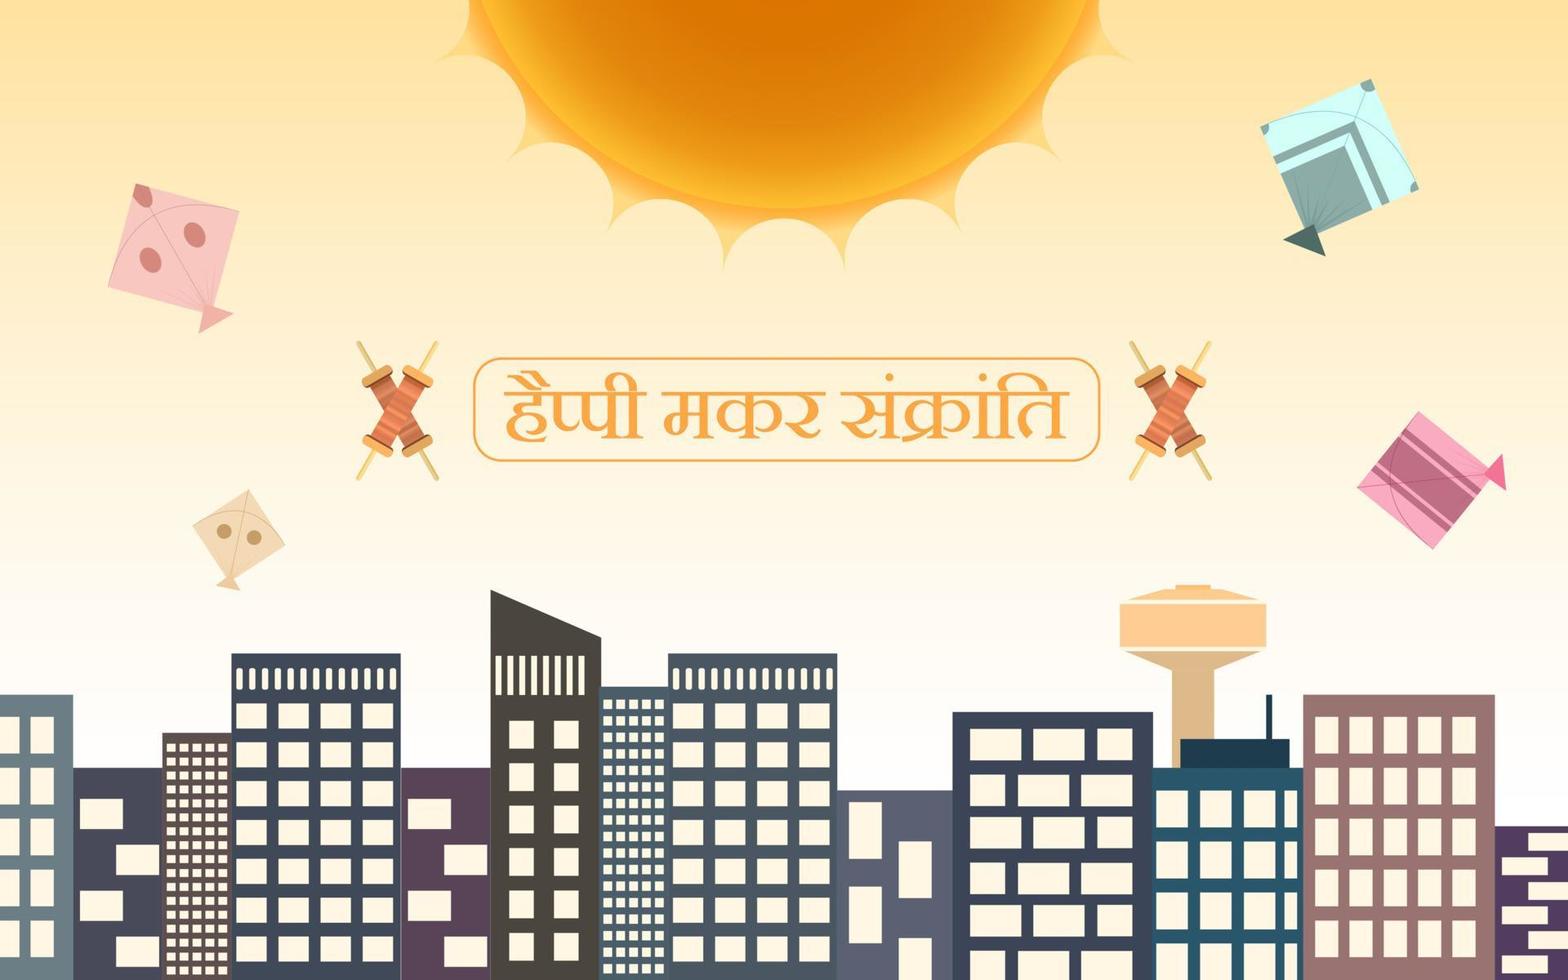 Happy Makar Sankranti-Vektor-Illustration erstellt mit Gebäude, Sonne, Drachen und Manjha Charkhi, Happy Makar Sankranti-Vektor-Illustrationsbanner. vektor